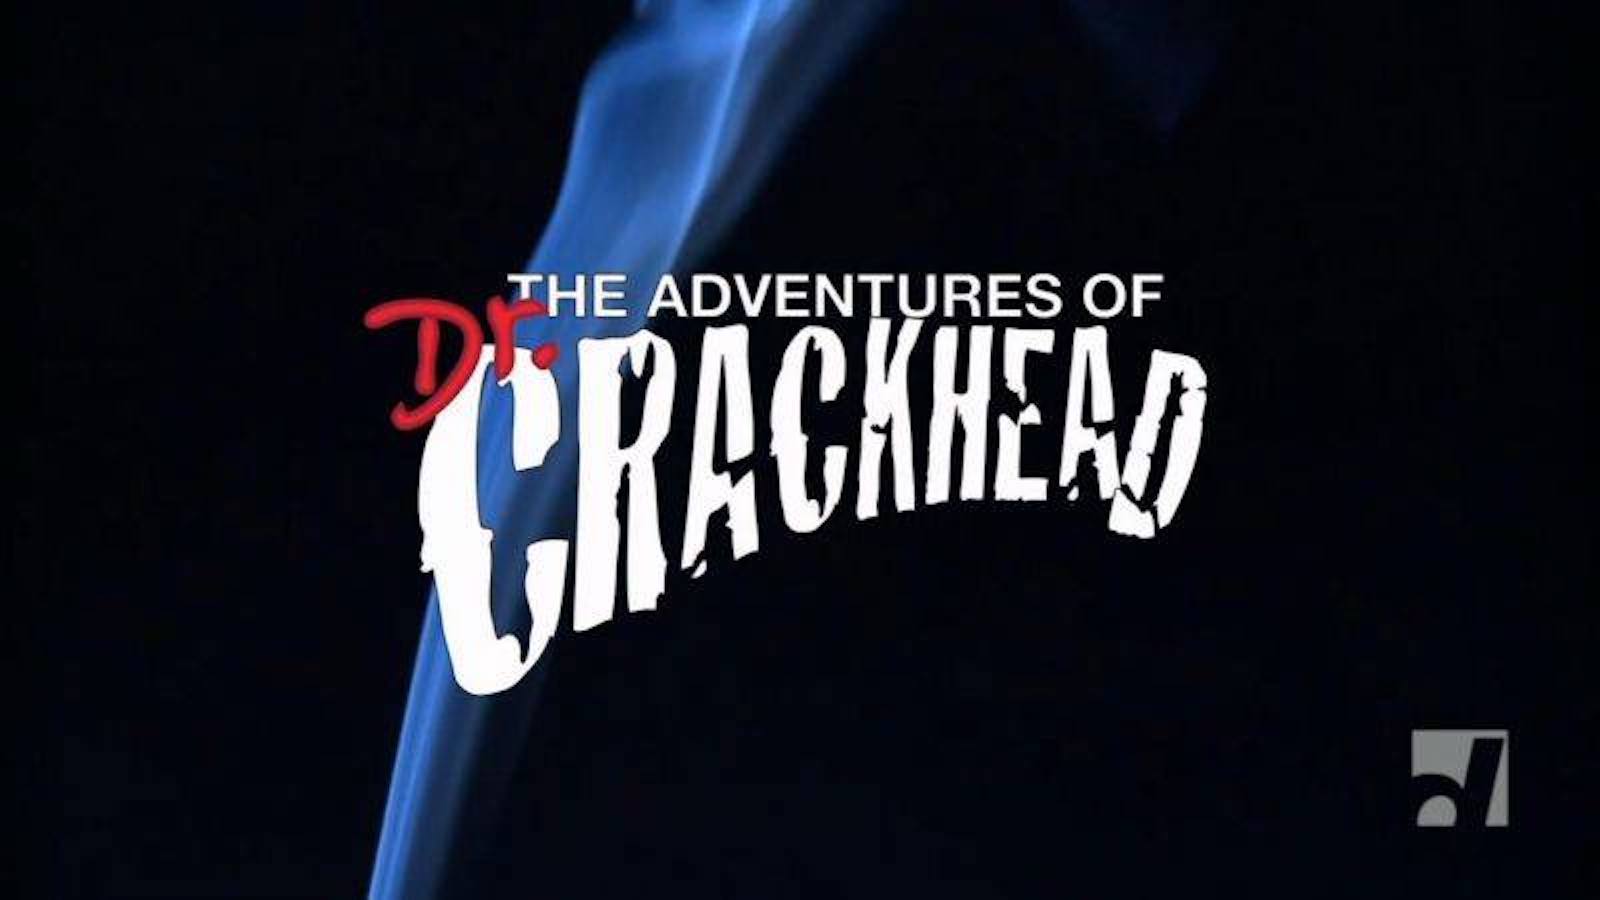 The Adventures of Dr. Crackhead (2013) Screenshot 1 